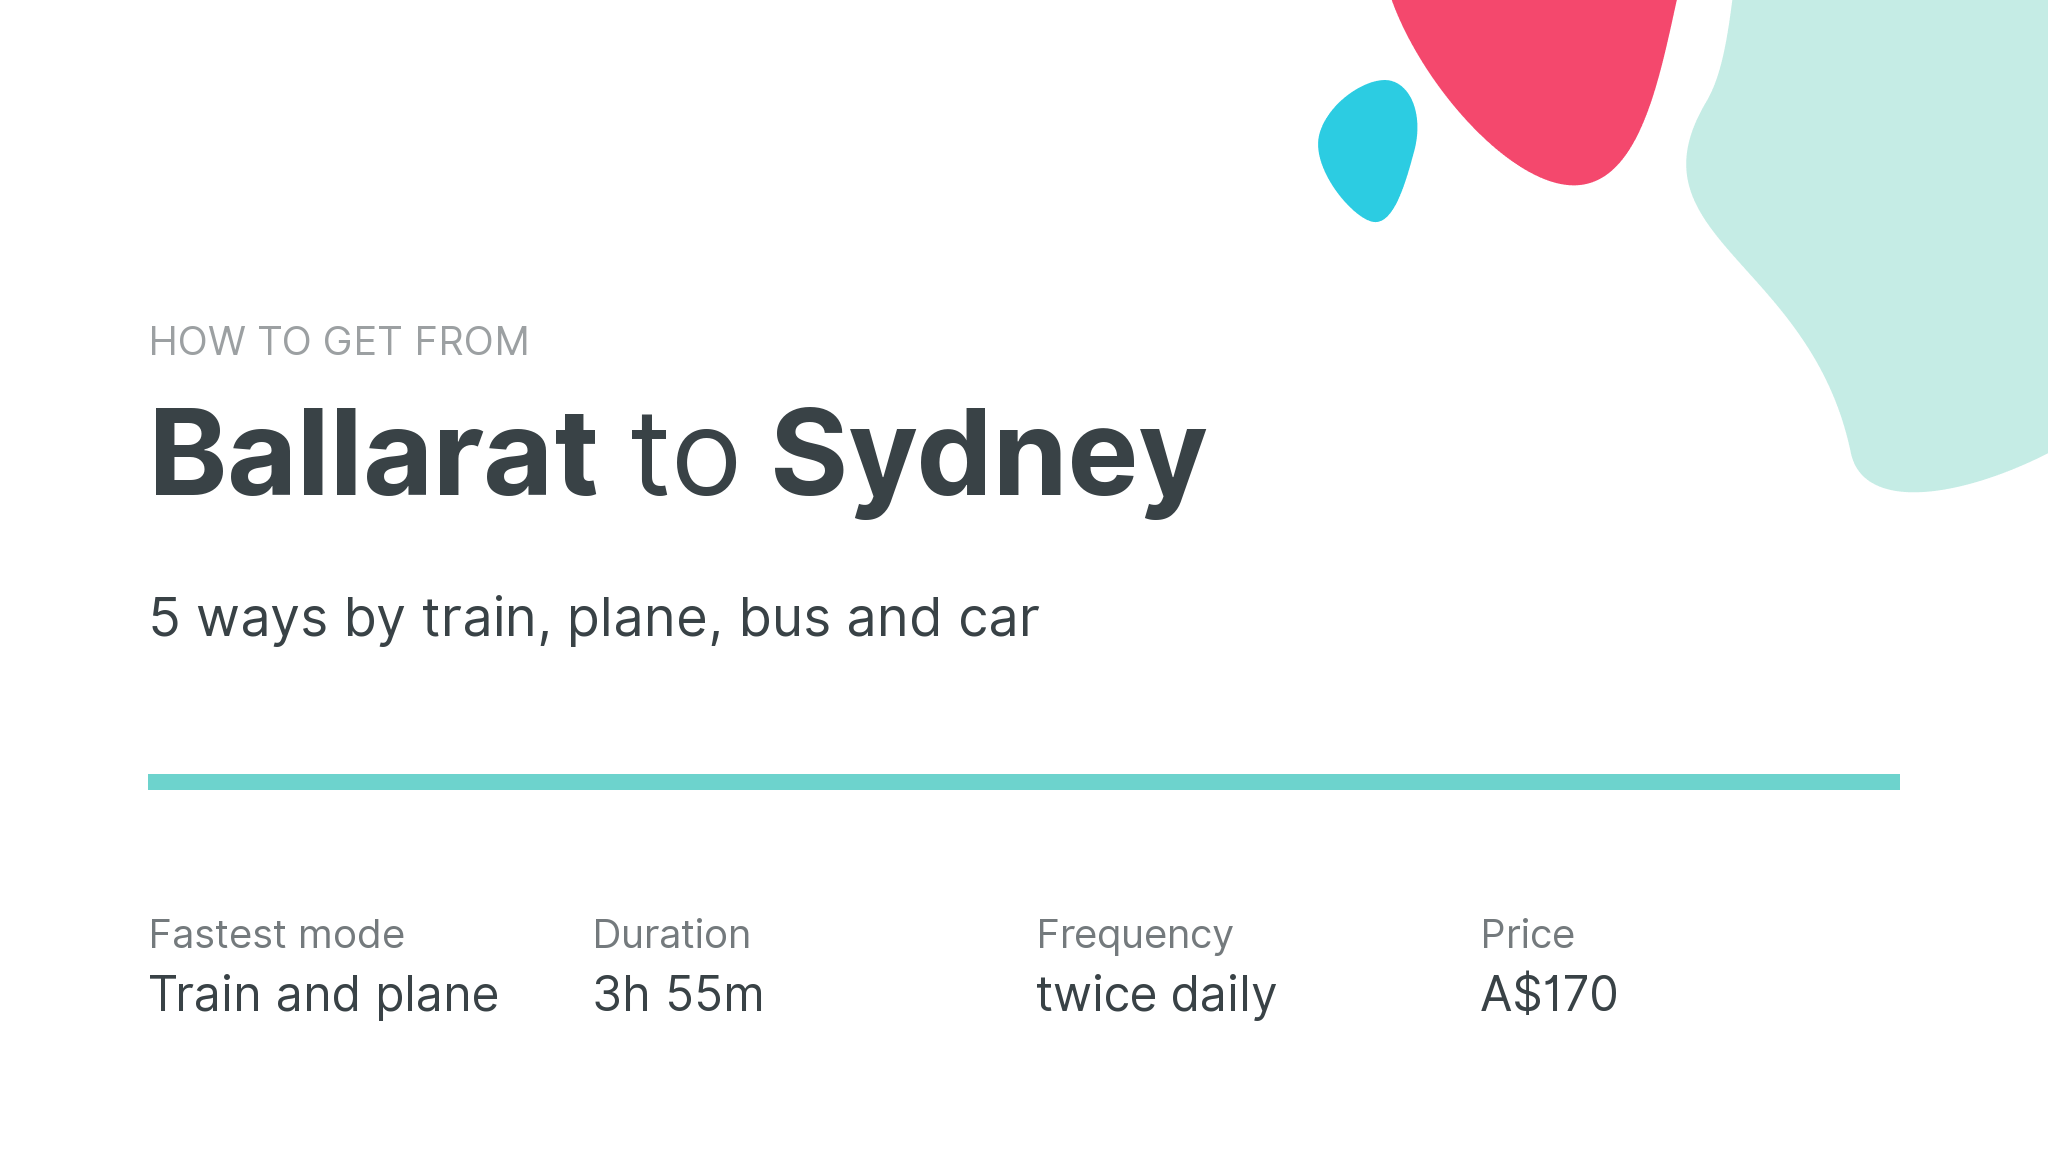 How do I get from Ballarat to Sydney